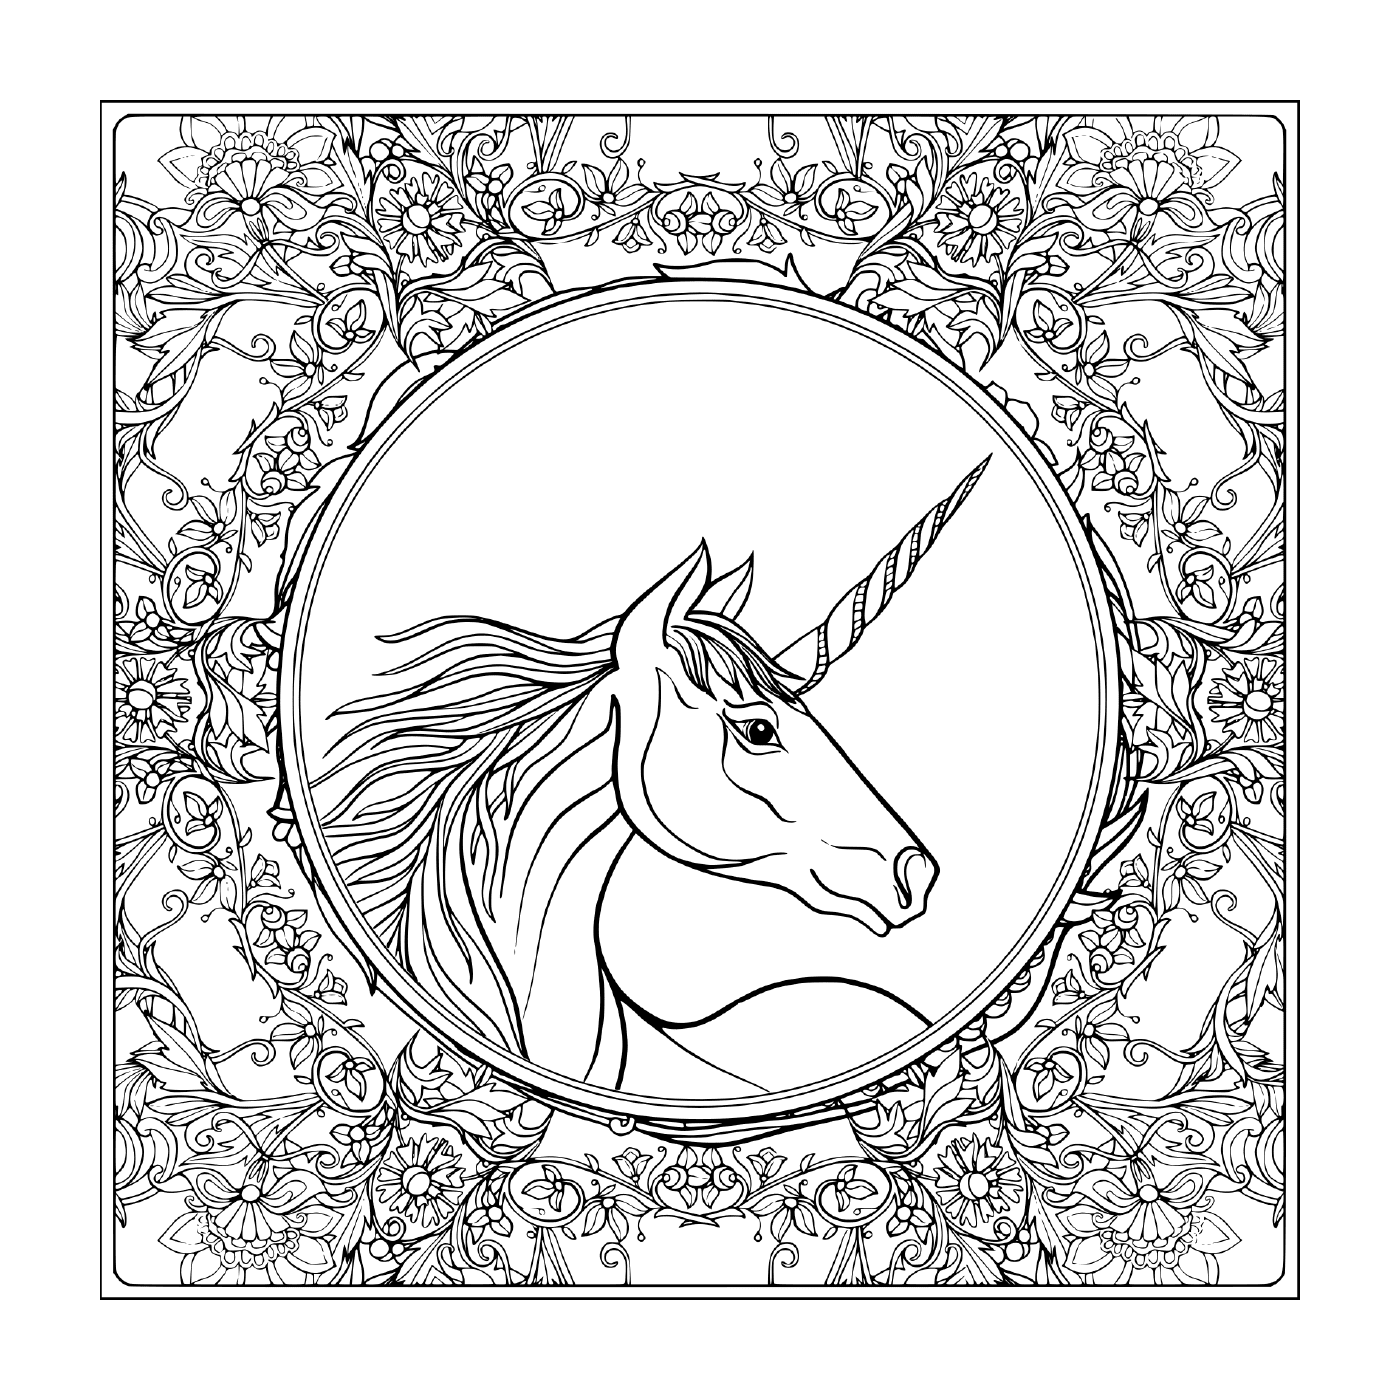  Unicornio vintage en un mandala floral 